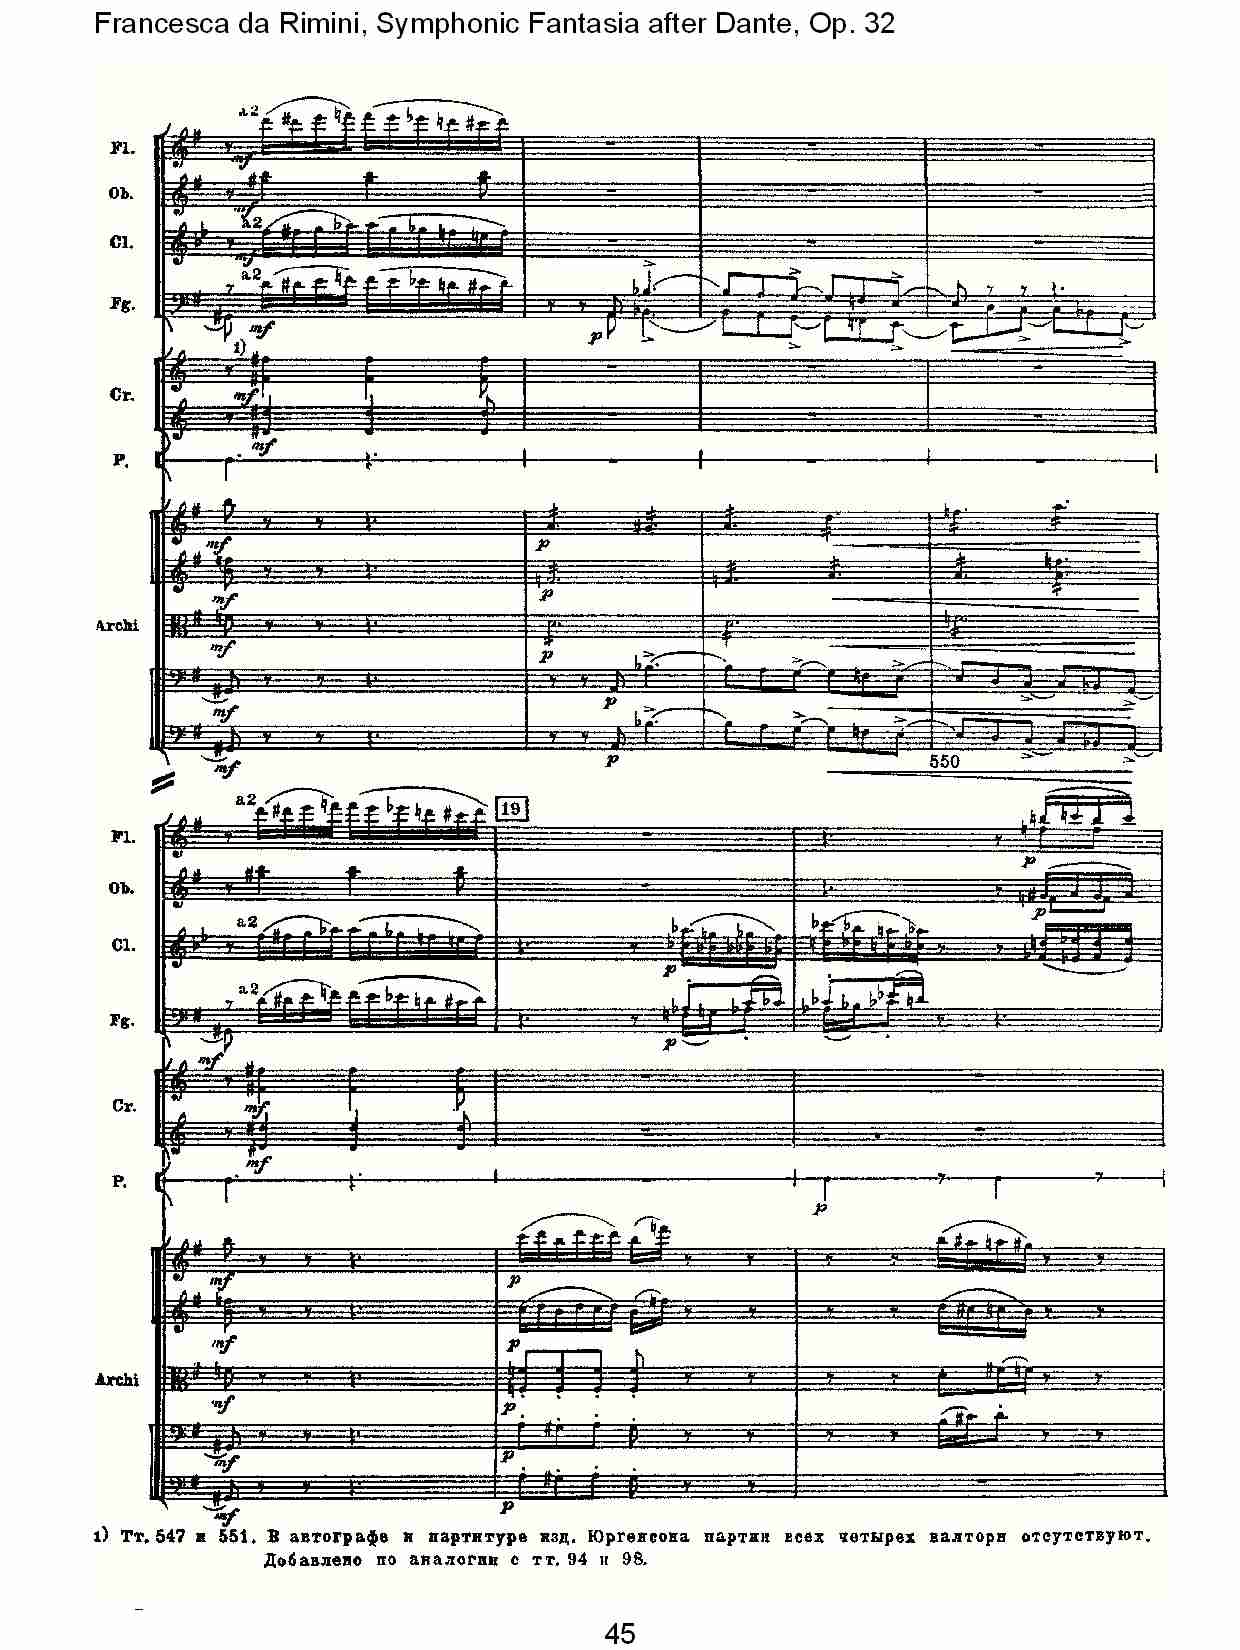 Francesca da Rimini, 但丁幻想曲Op.32 第二部（九）